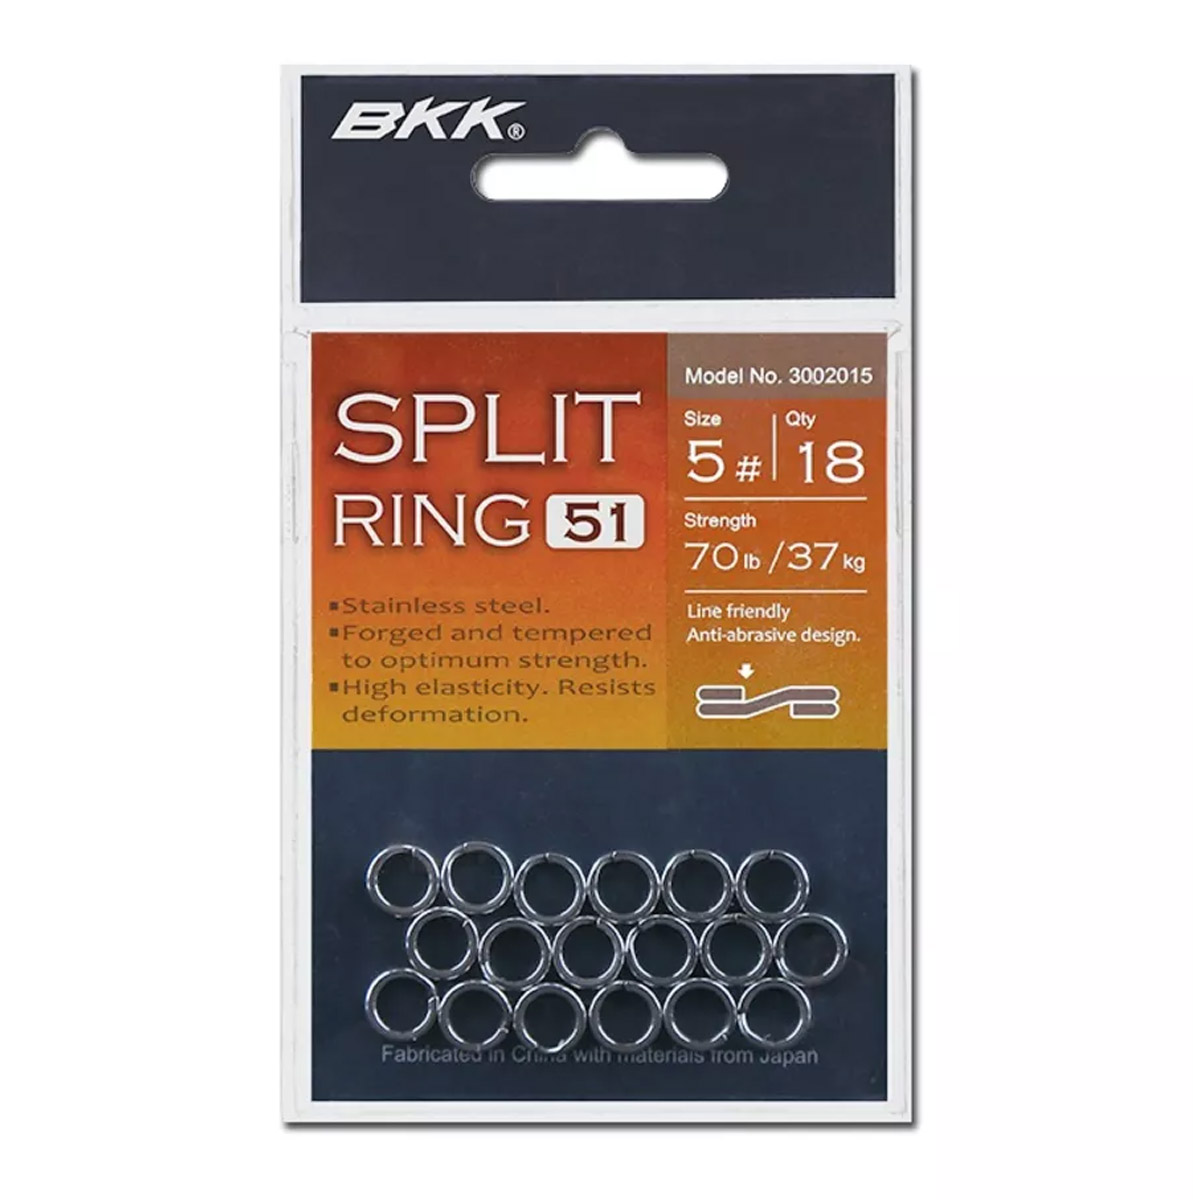 Bkk Split Ring 51